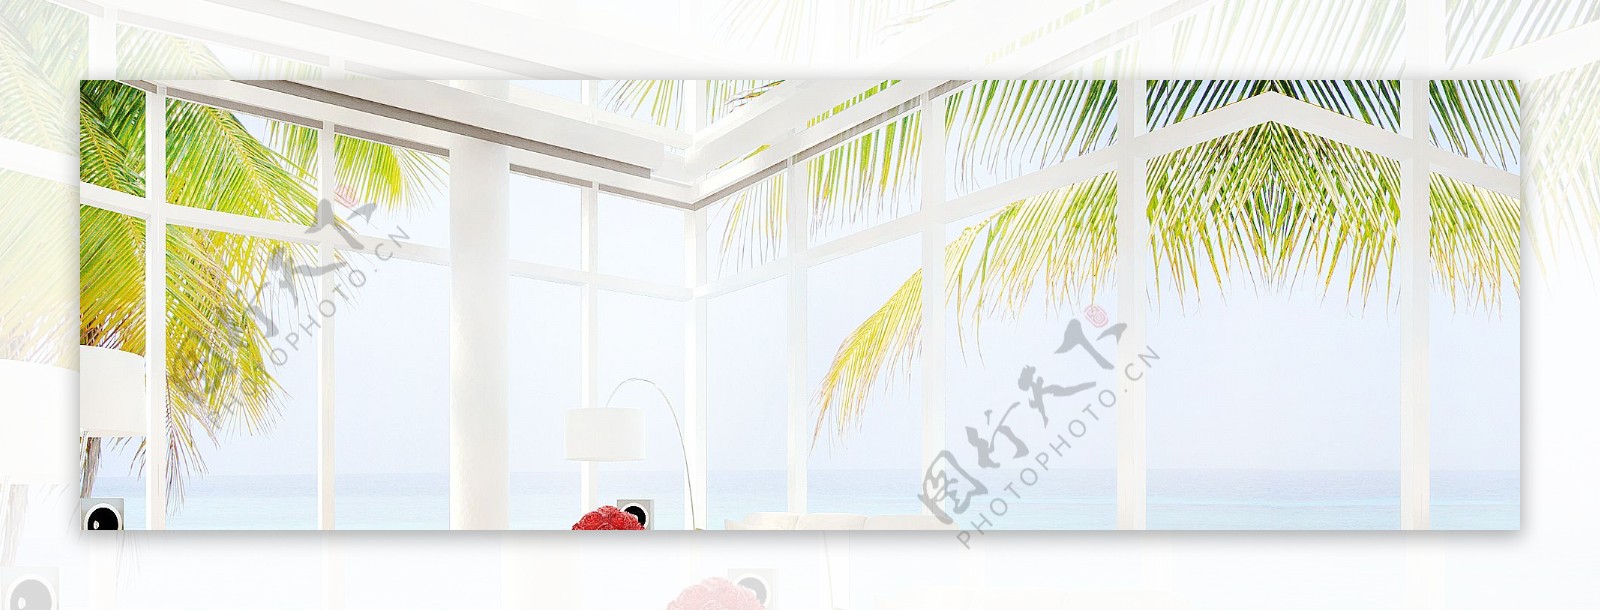 唯美海滩窗外风景banner背景